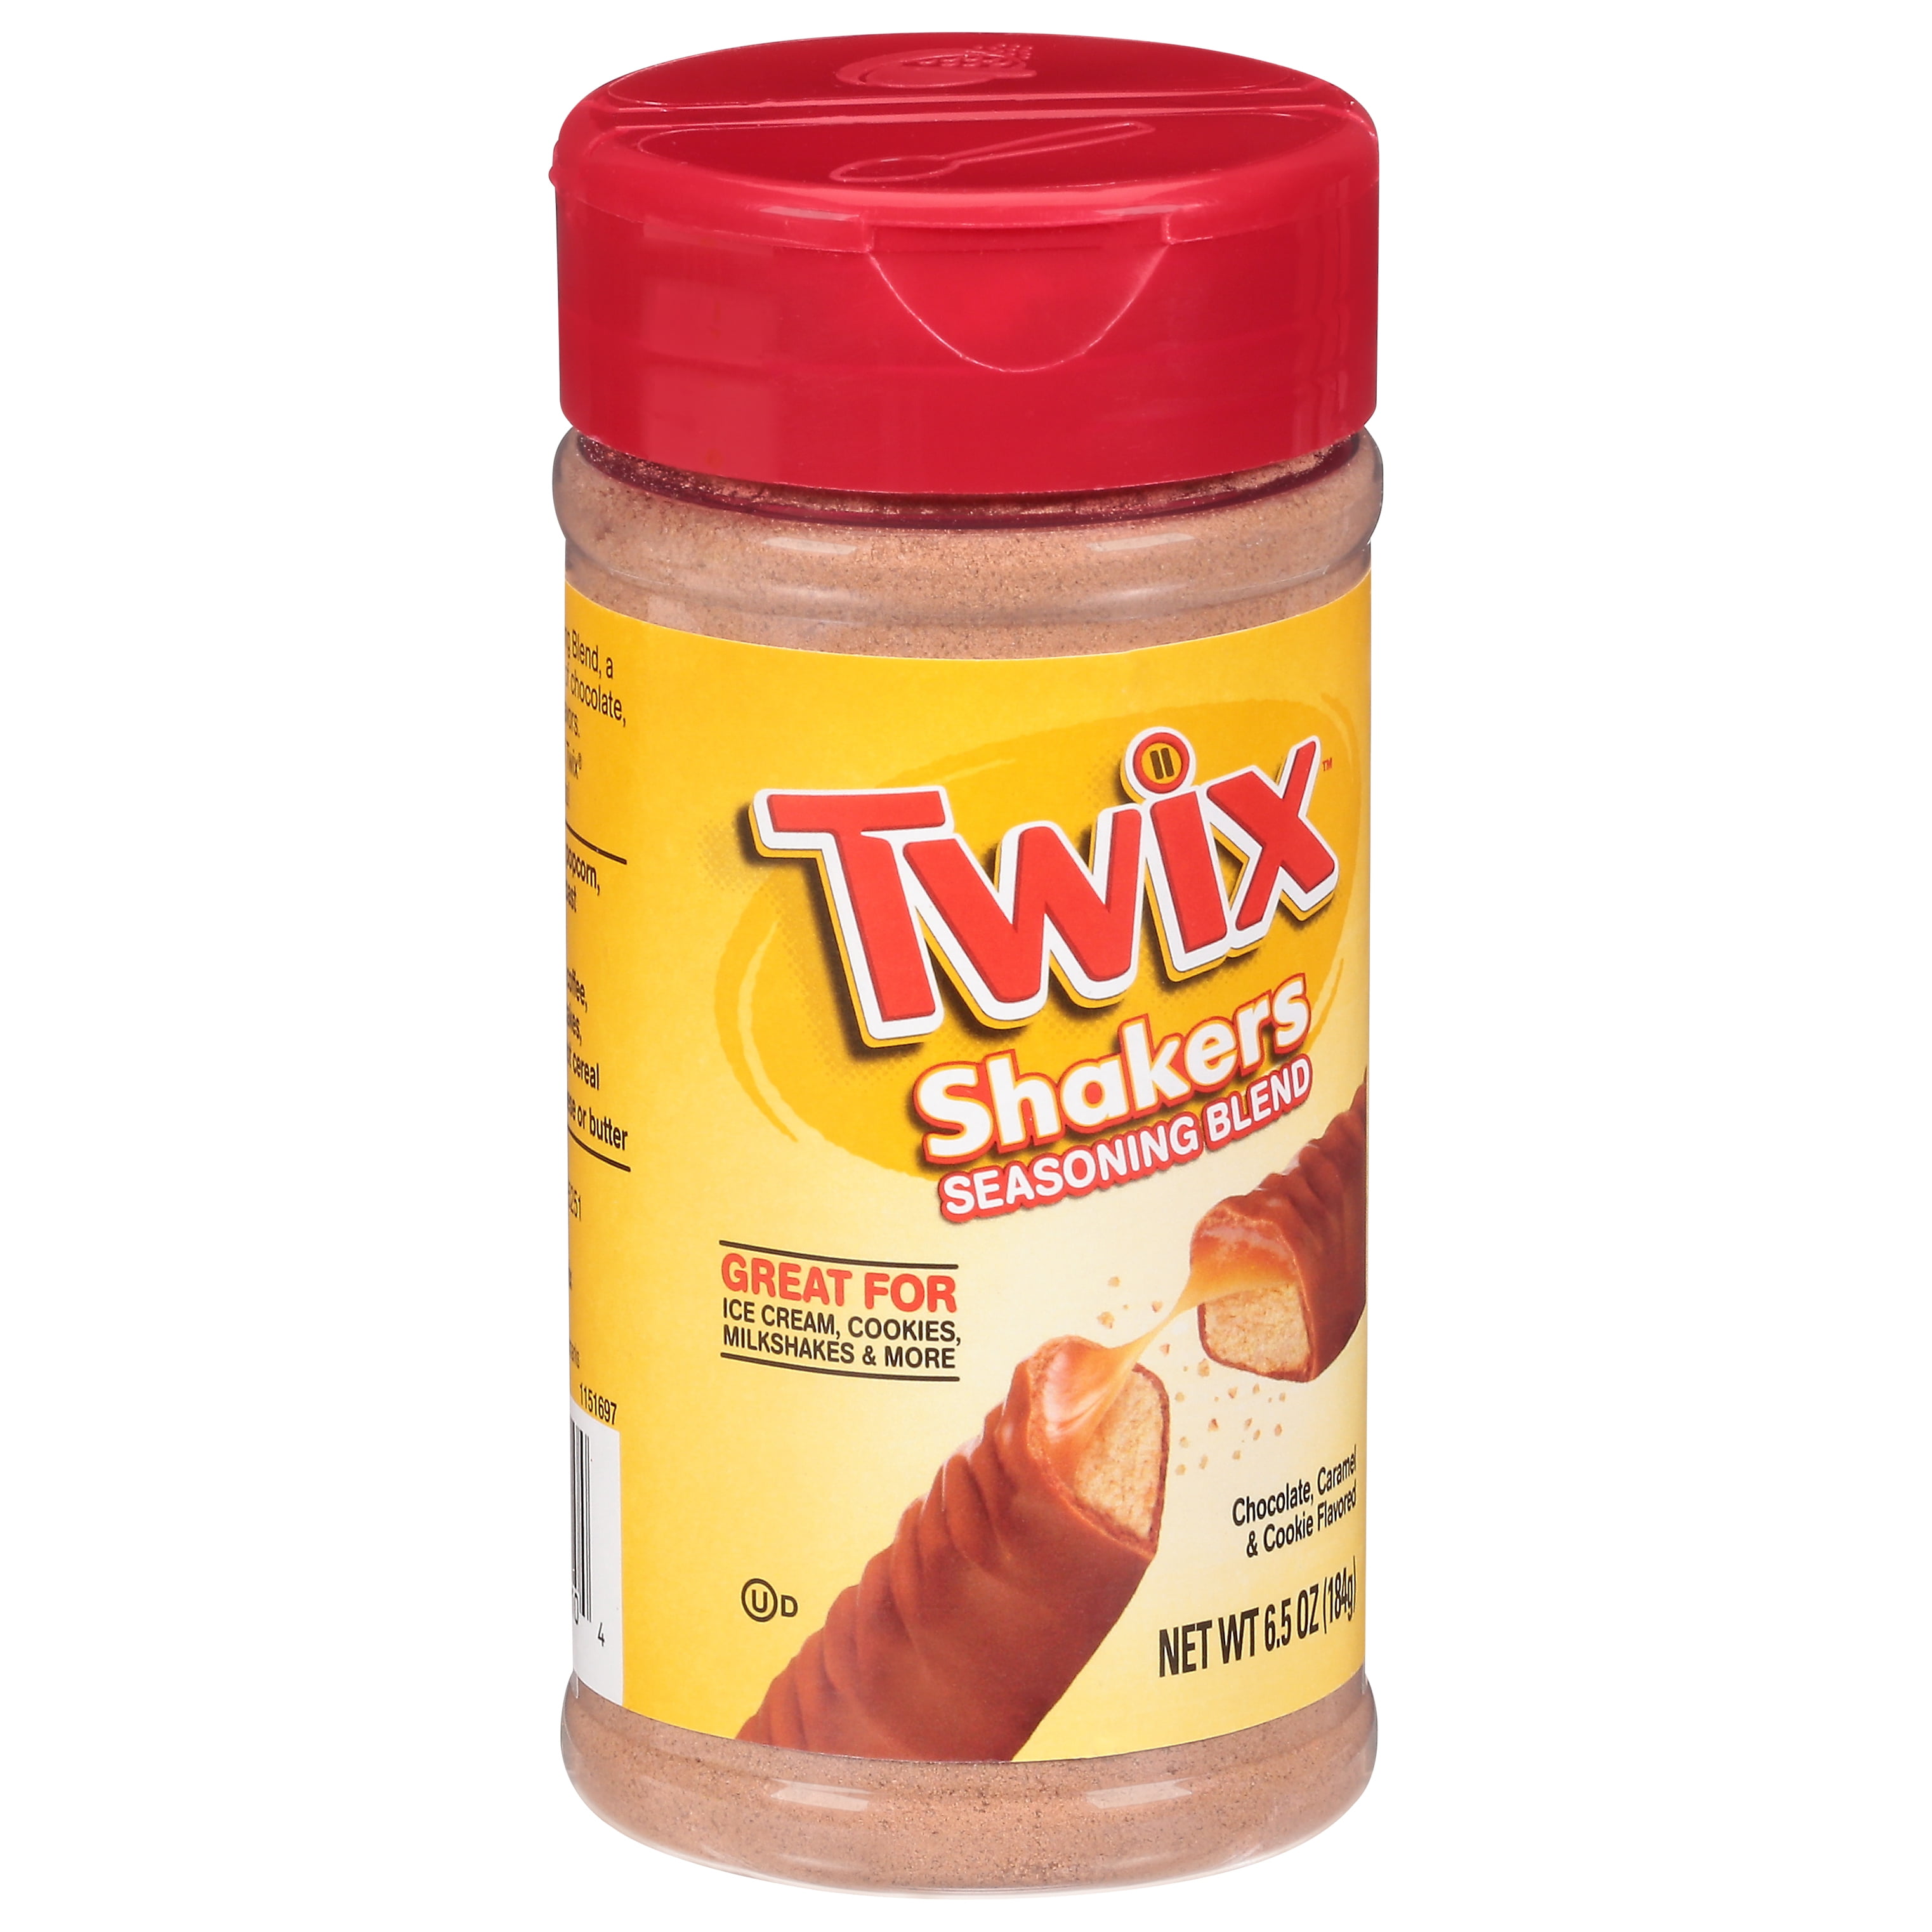 twix shakers seasoning blend